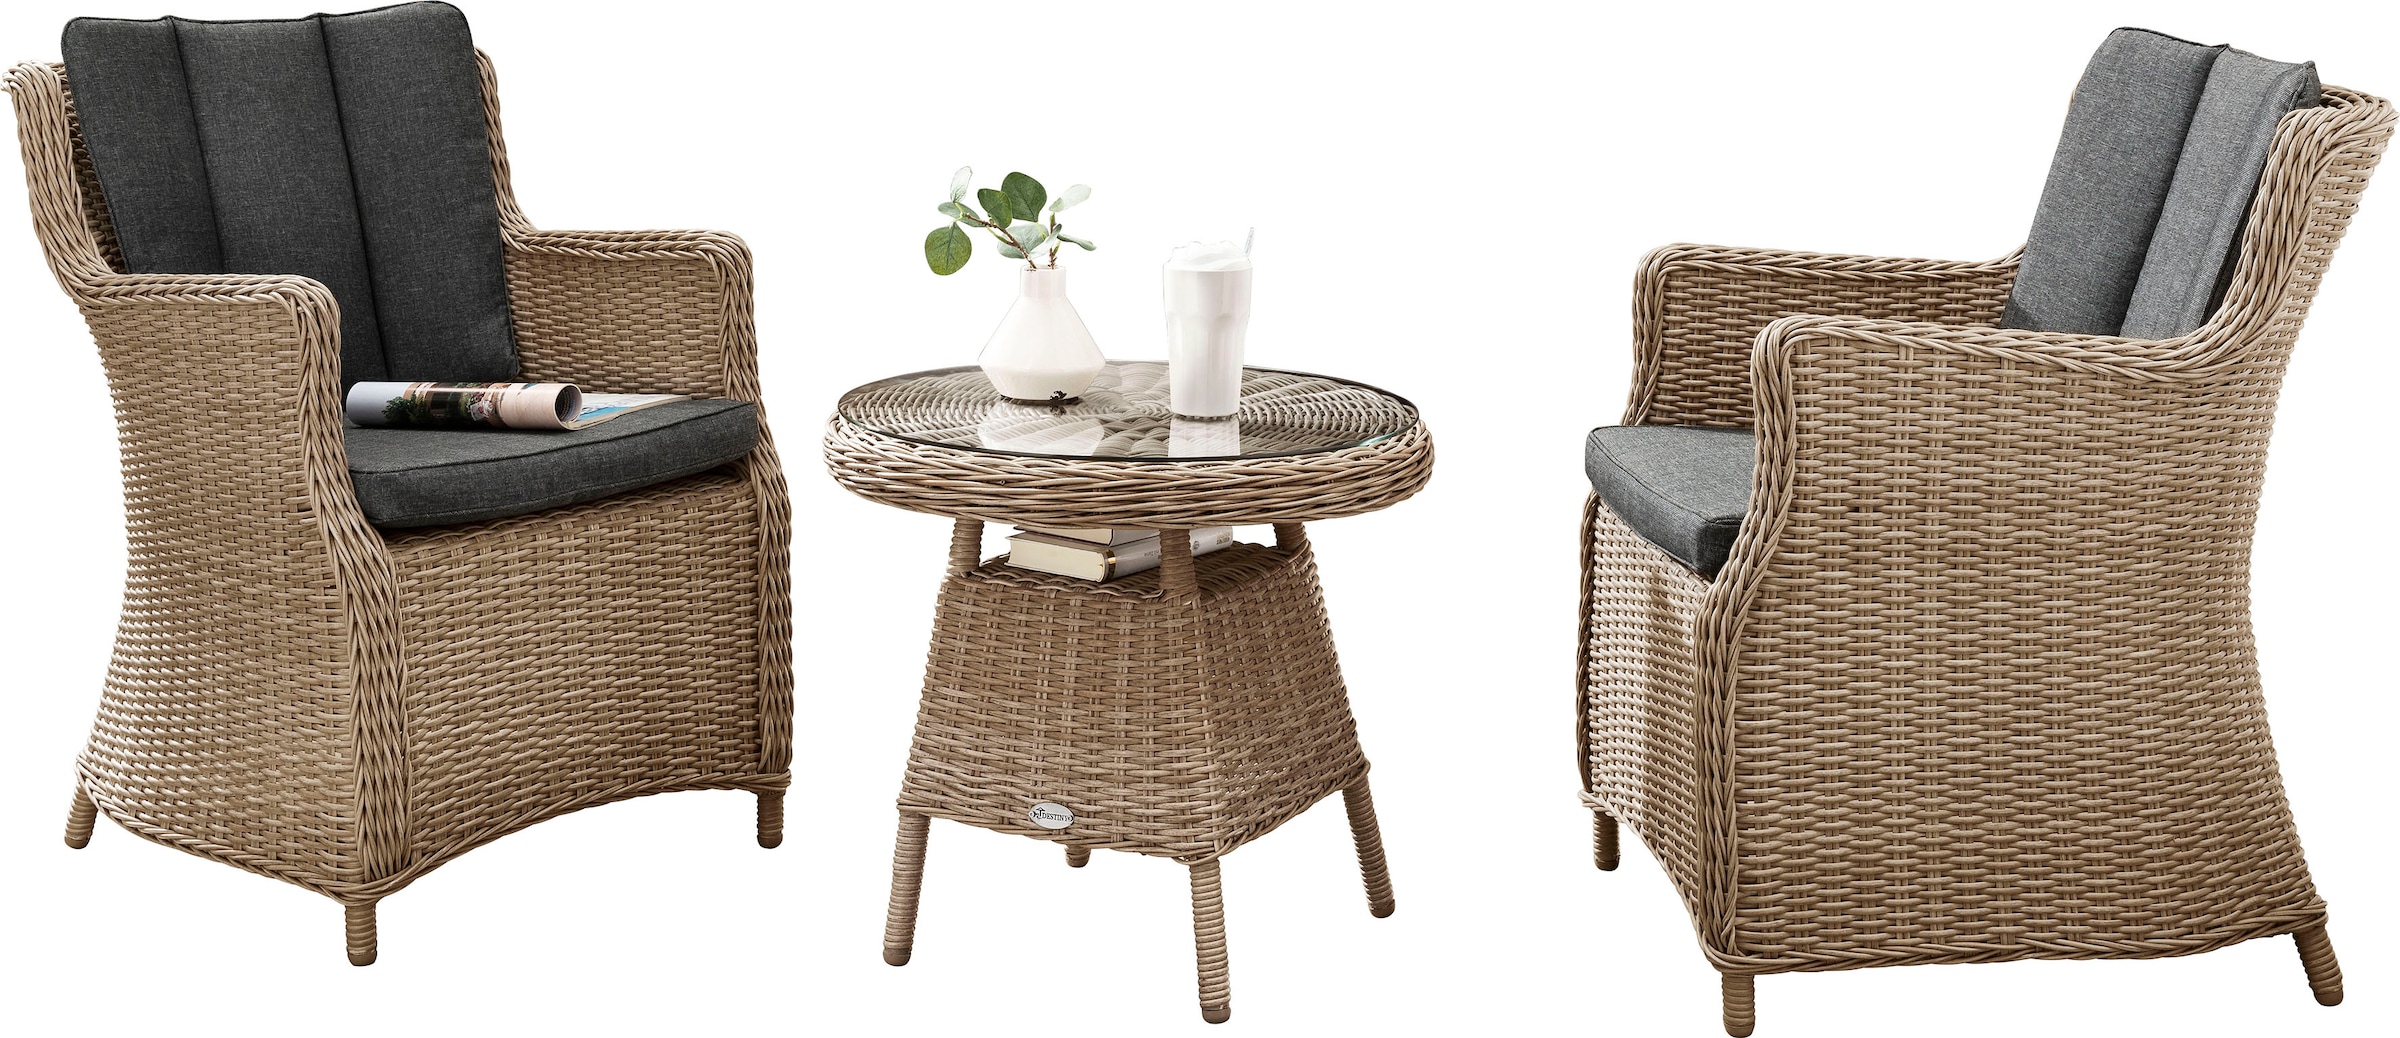 Destiny Balkonset »LUNA MALAGA«, (Set, 7 tlg.), Polyrattan, 2 Sessel + Kaffeetisch Ø 60x55 cm, + Auflagen grau